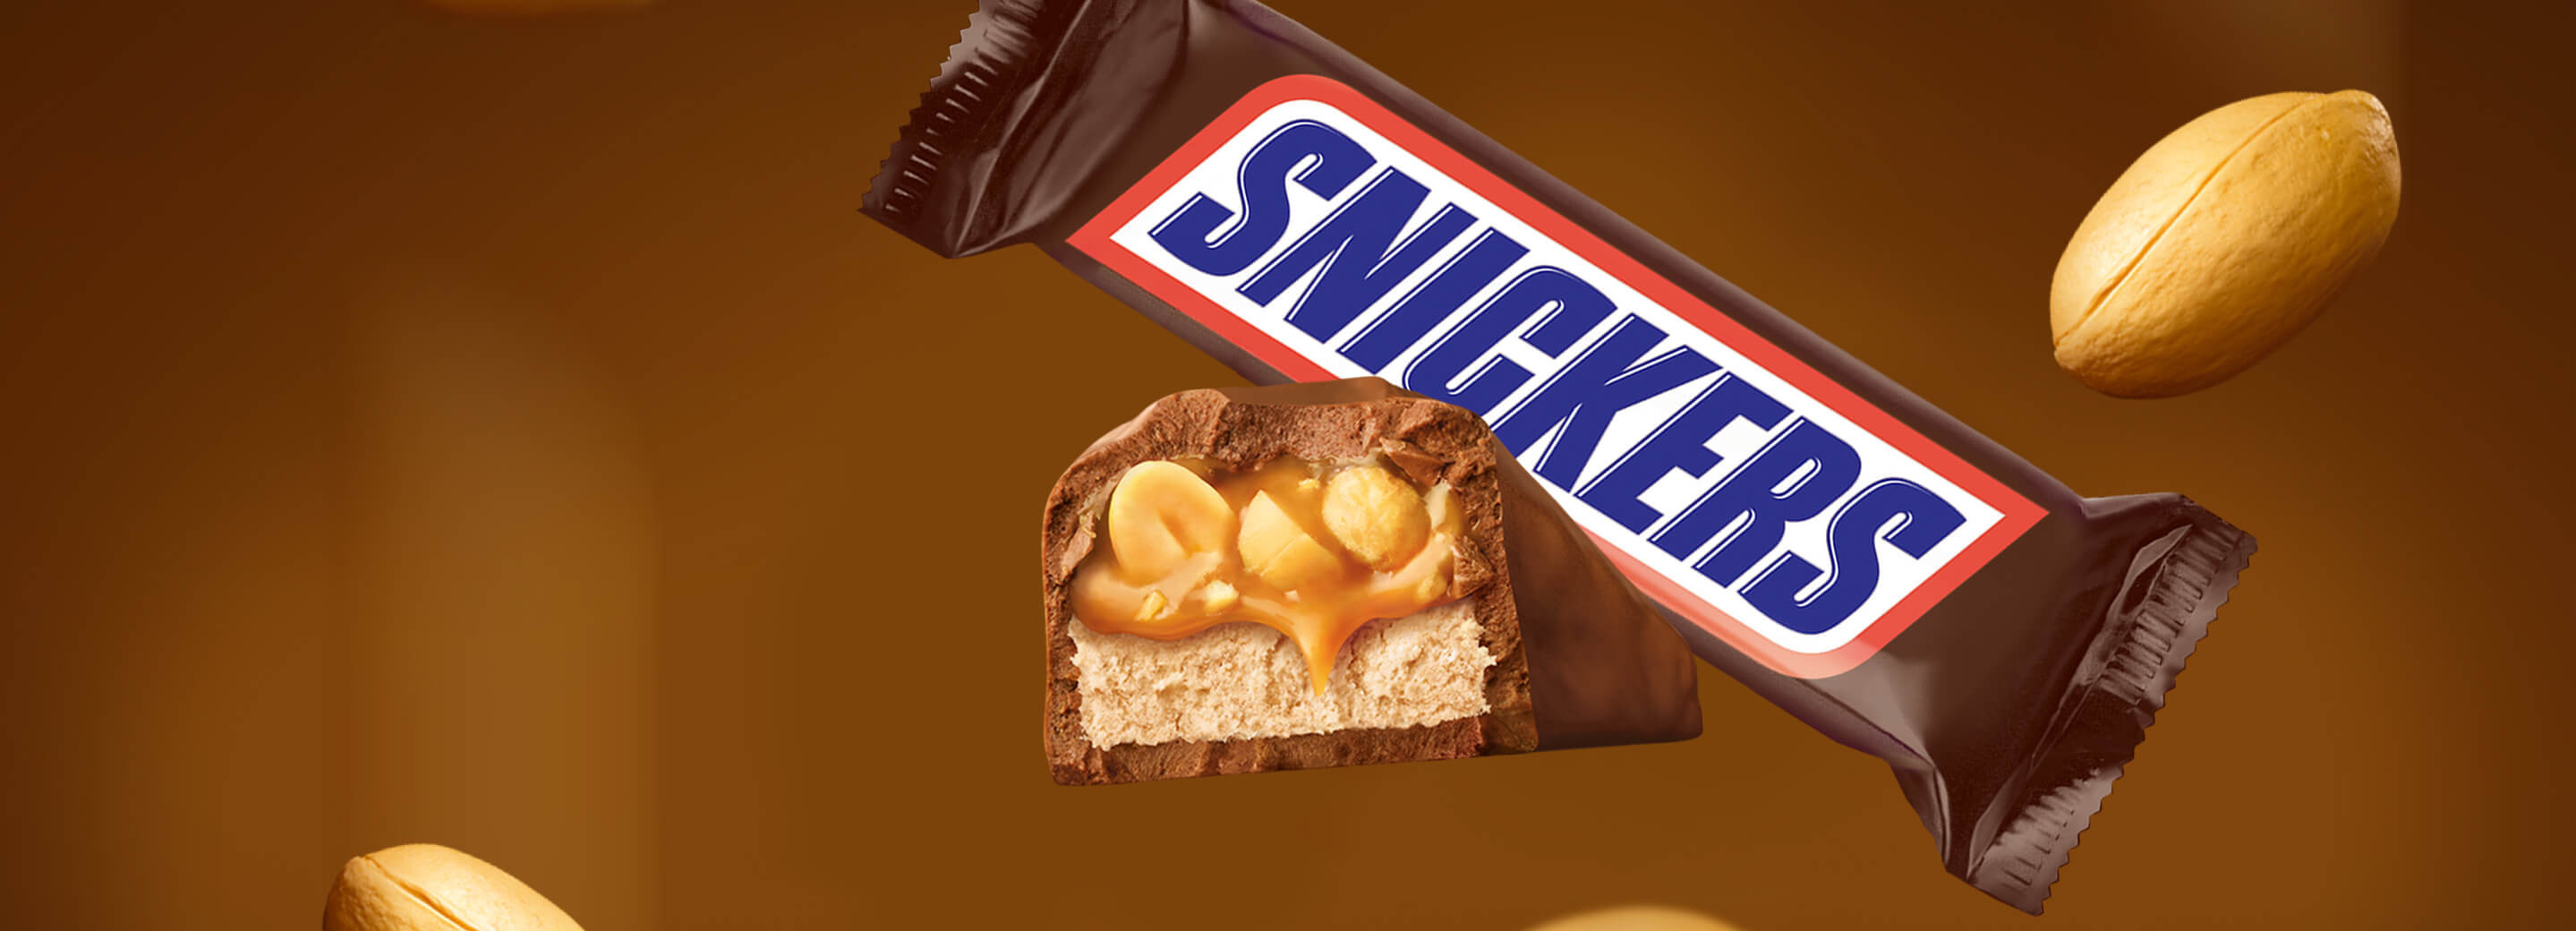 Snickers Original Schokoriegel